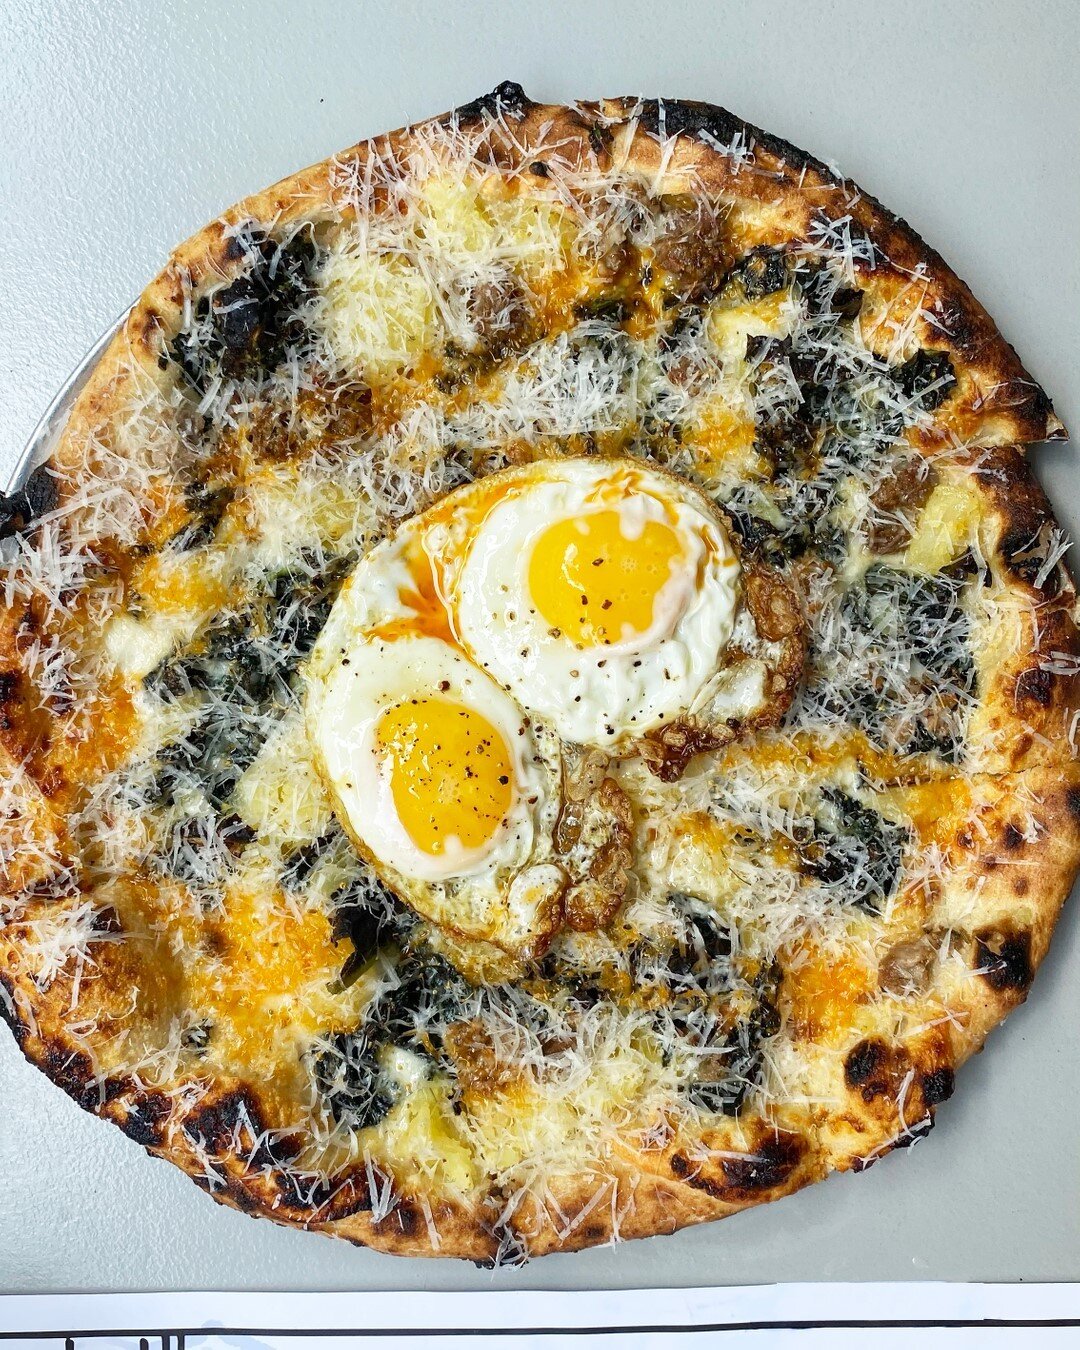 ALL HAIL BLACK KALE 🙌🏼⠀⠀⠀⠀⠀⠀⠀⠀⠀
⠀⠀⠀⠀⠀⠀⠀⠀⠀
fennel sausage, black kale, caciocavallo, potato, mozzarella, chili oil, egg⠀⠀⠀⠀⠀⠀⠀⠀⠀
⠀⠀⠀⠀⠀⠀⠀⠀⠀
#jonandvinnys #breakfastpizza